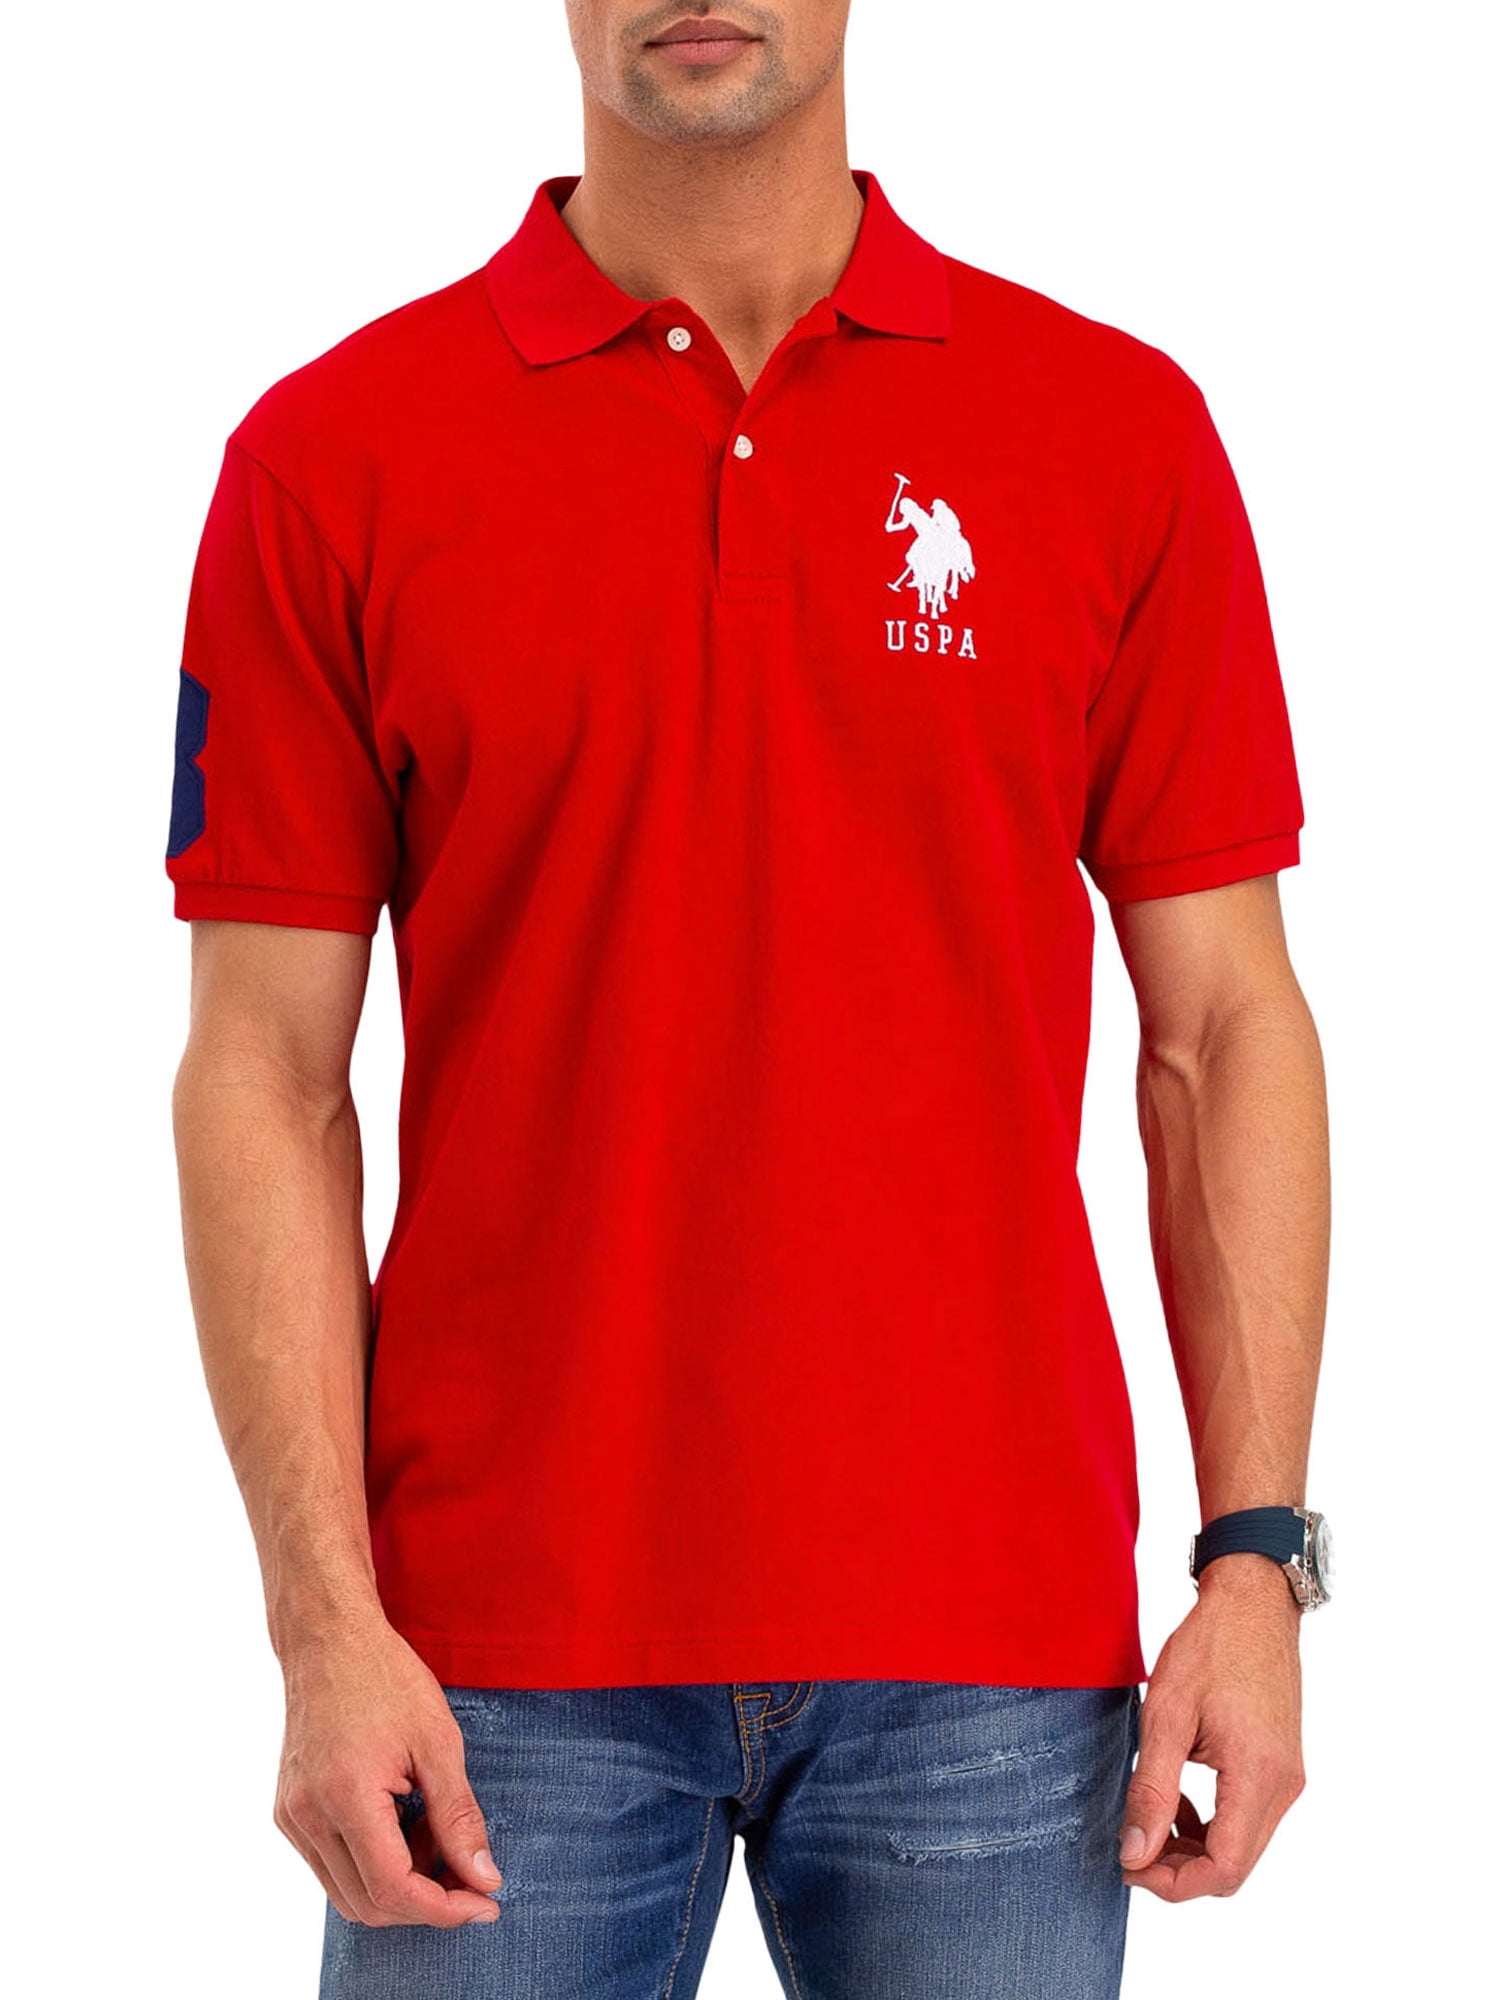 U.S Polo Assn Mens Short Sleeve Slim Fit Solid Pique Polo Shirt 